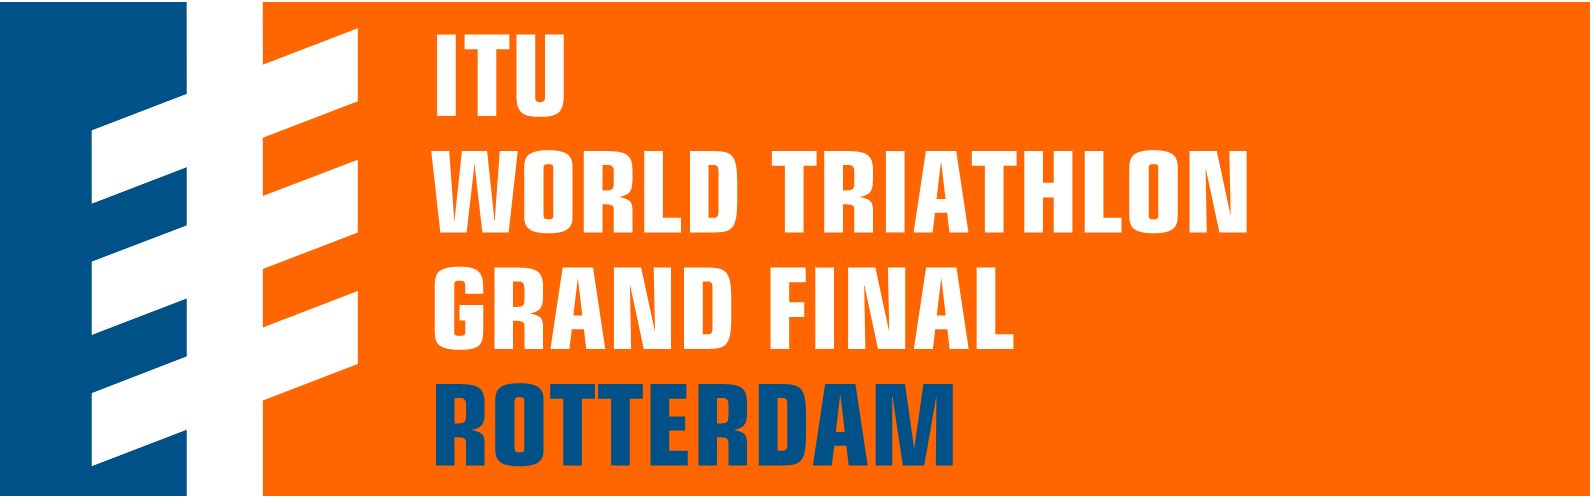 logo wts rotterdam2017